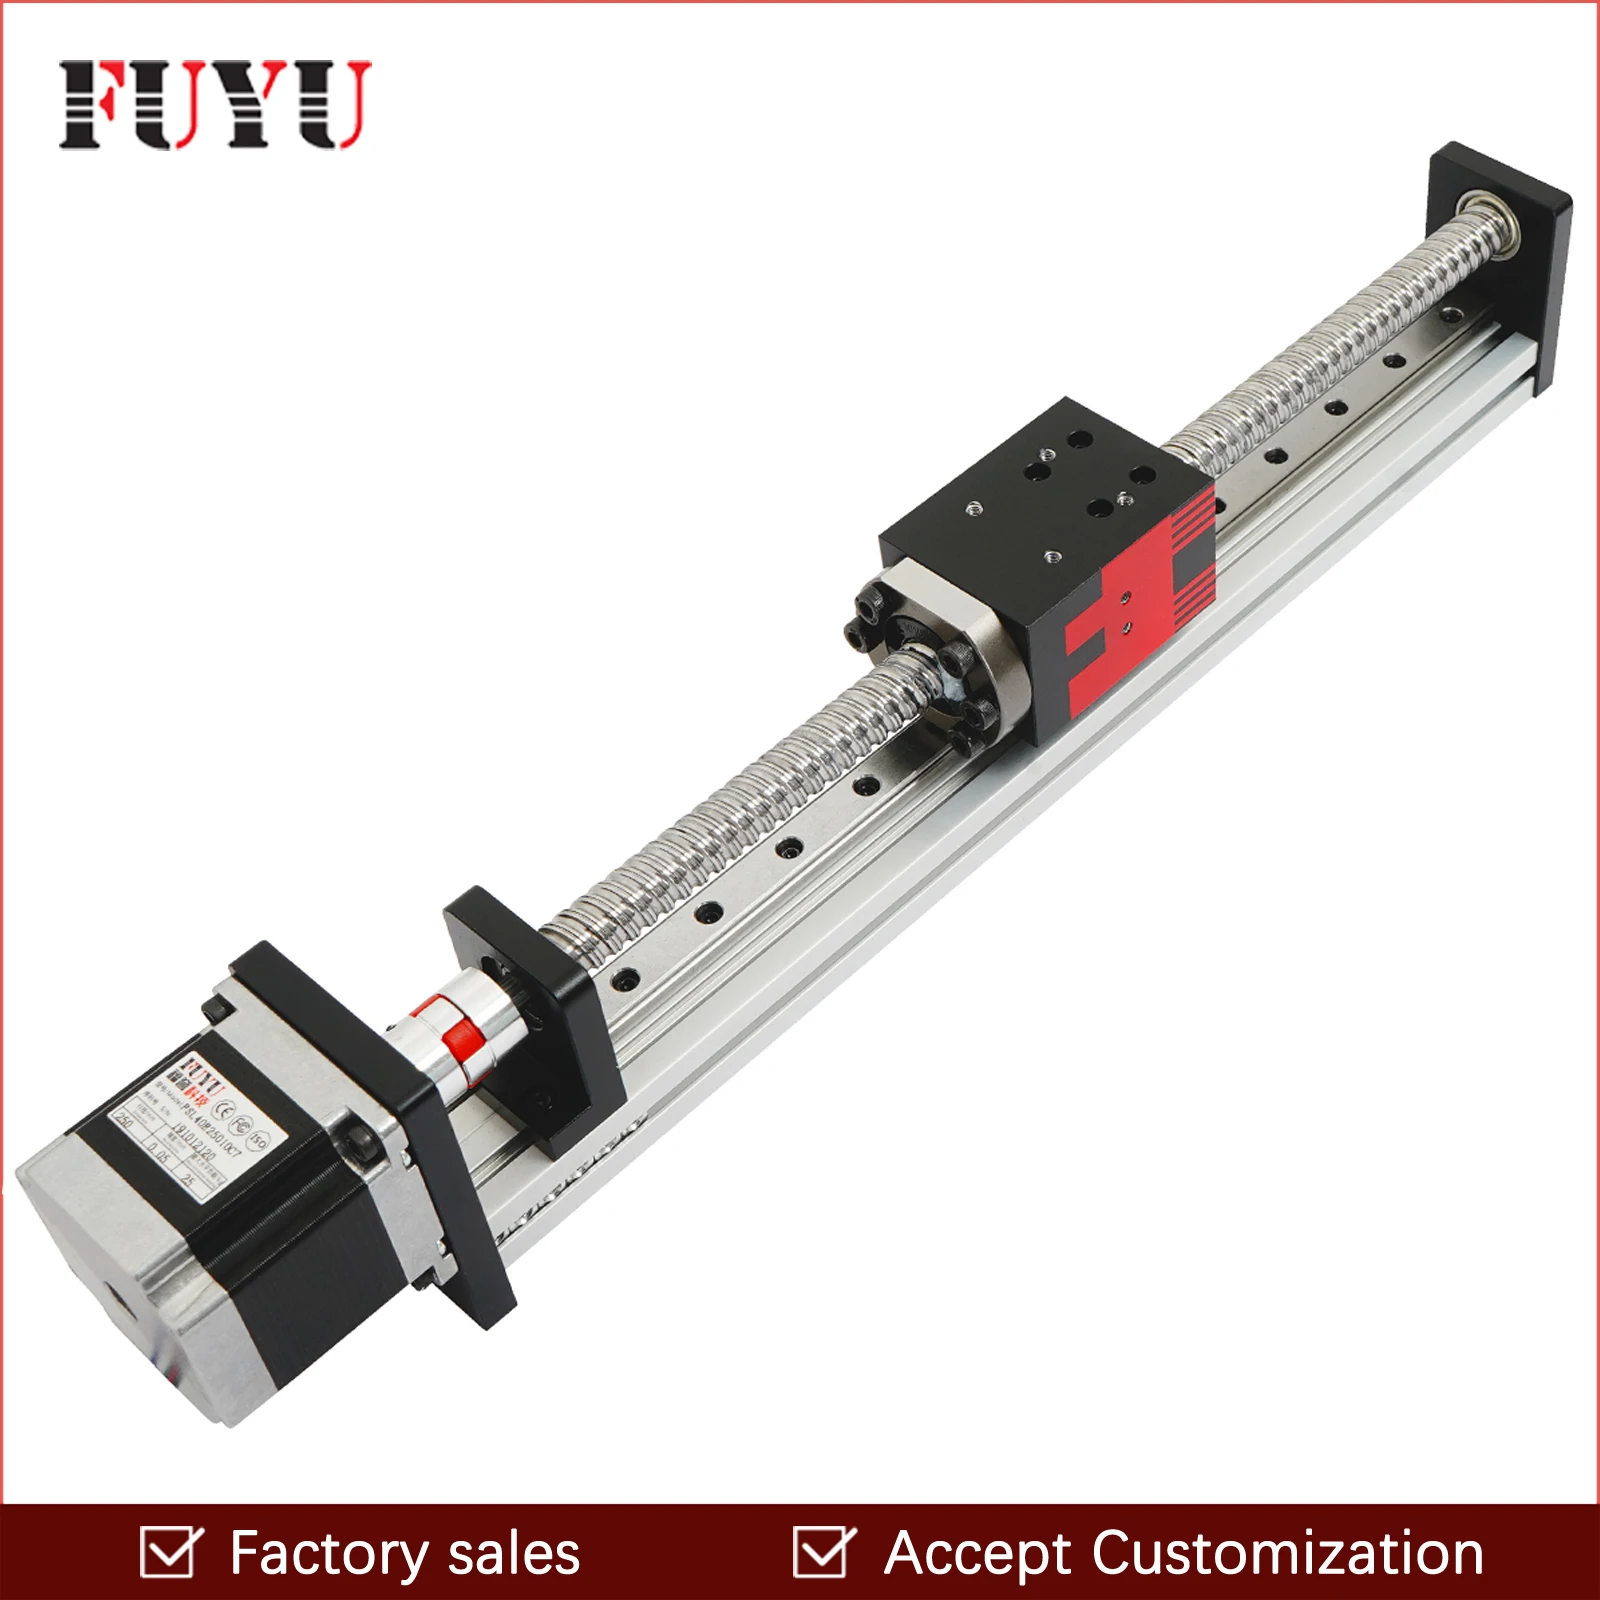 FUYU FSL30 Mini Linear Stage Actuator Small Slide Guide Rail CNC Screw Lead Motion Table Motorized Nema 11 Stepper Motor 300mm Stroke 